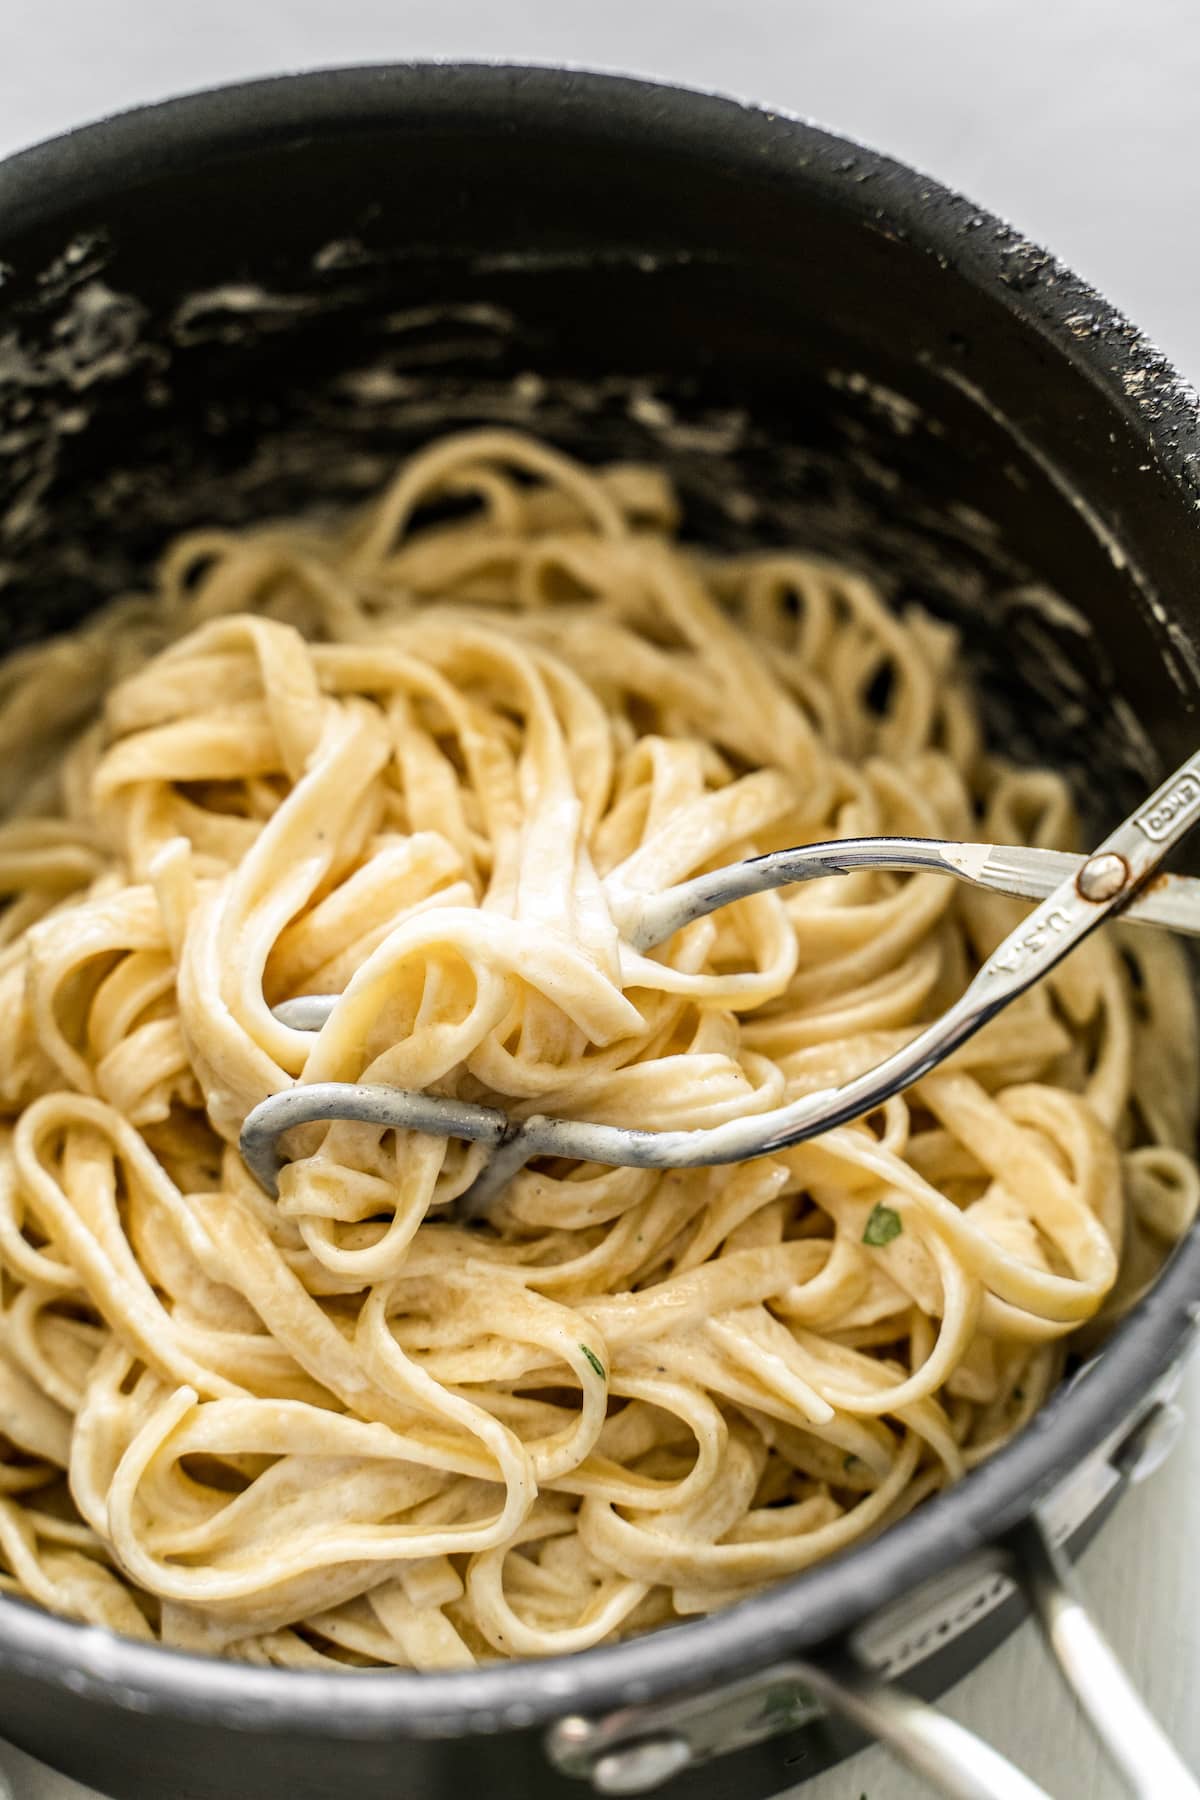 tongs mixing pasta alfredo